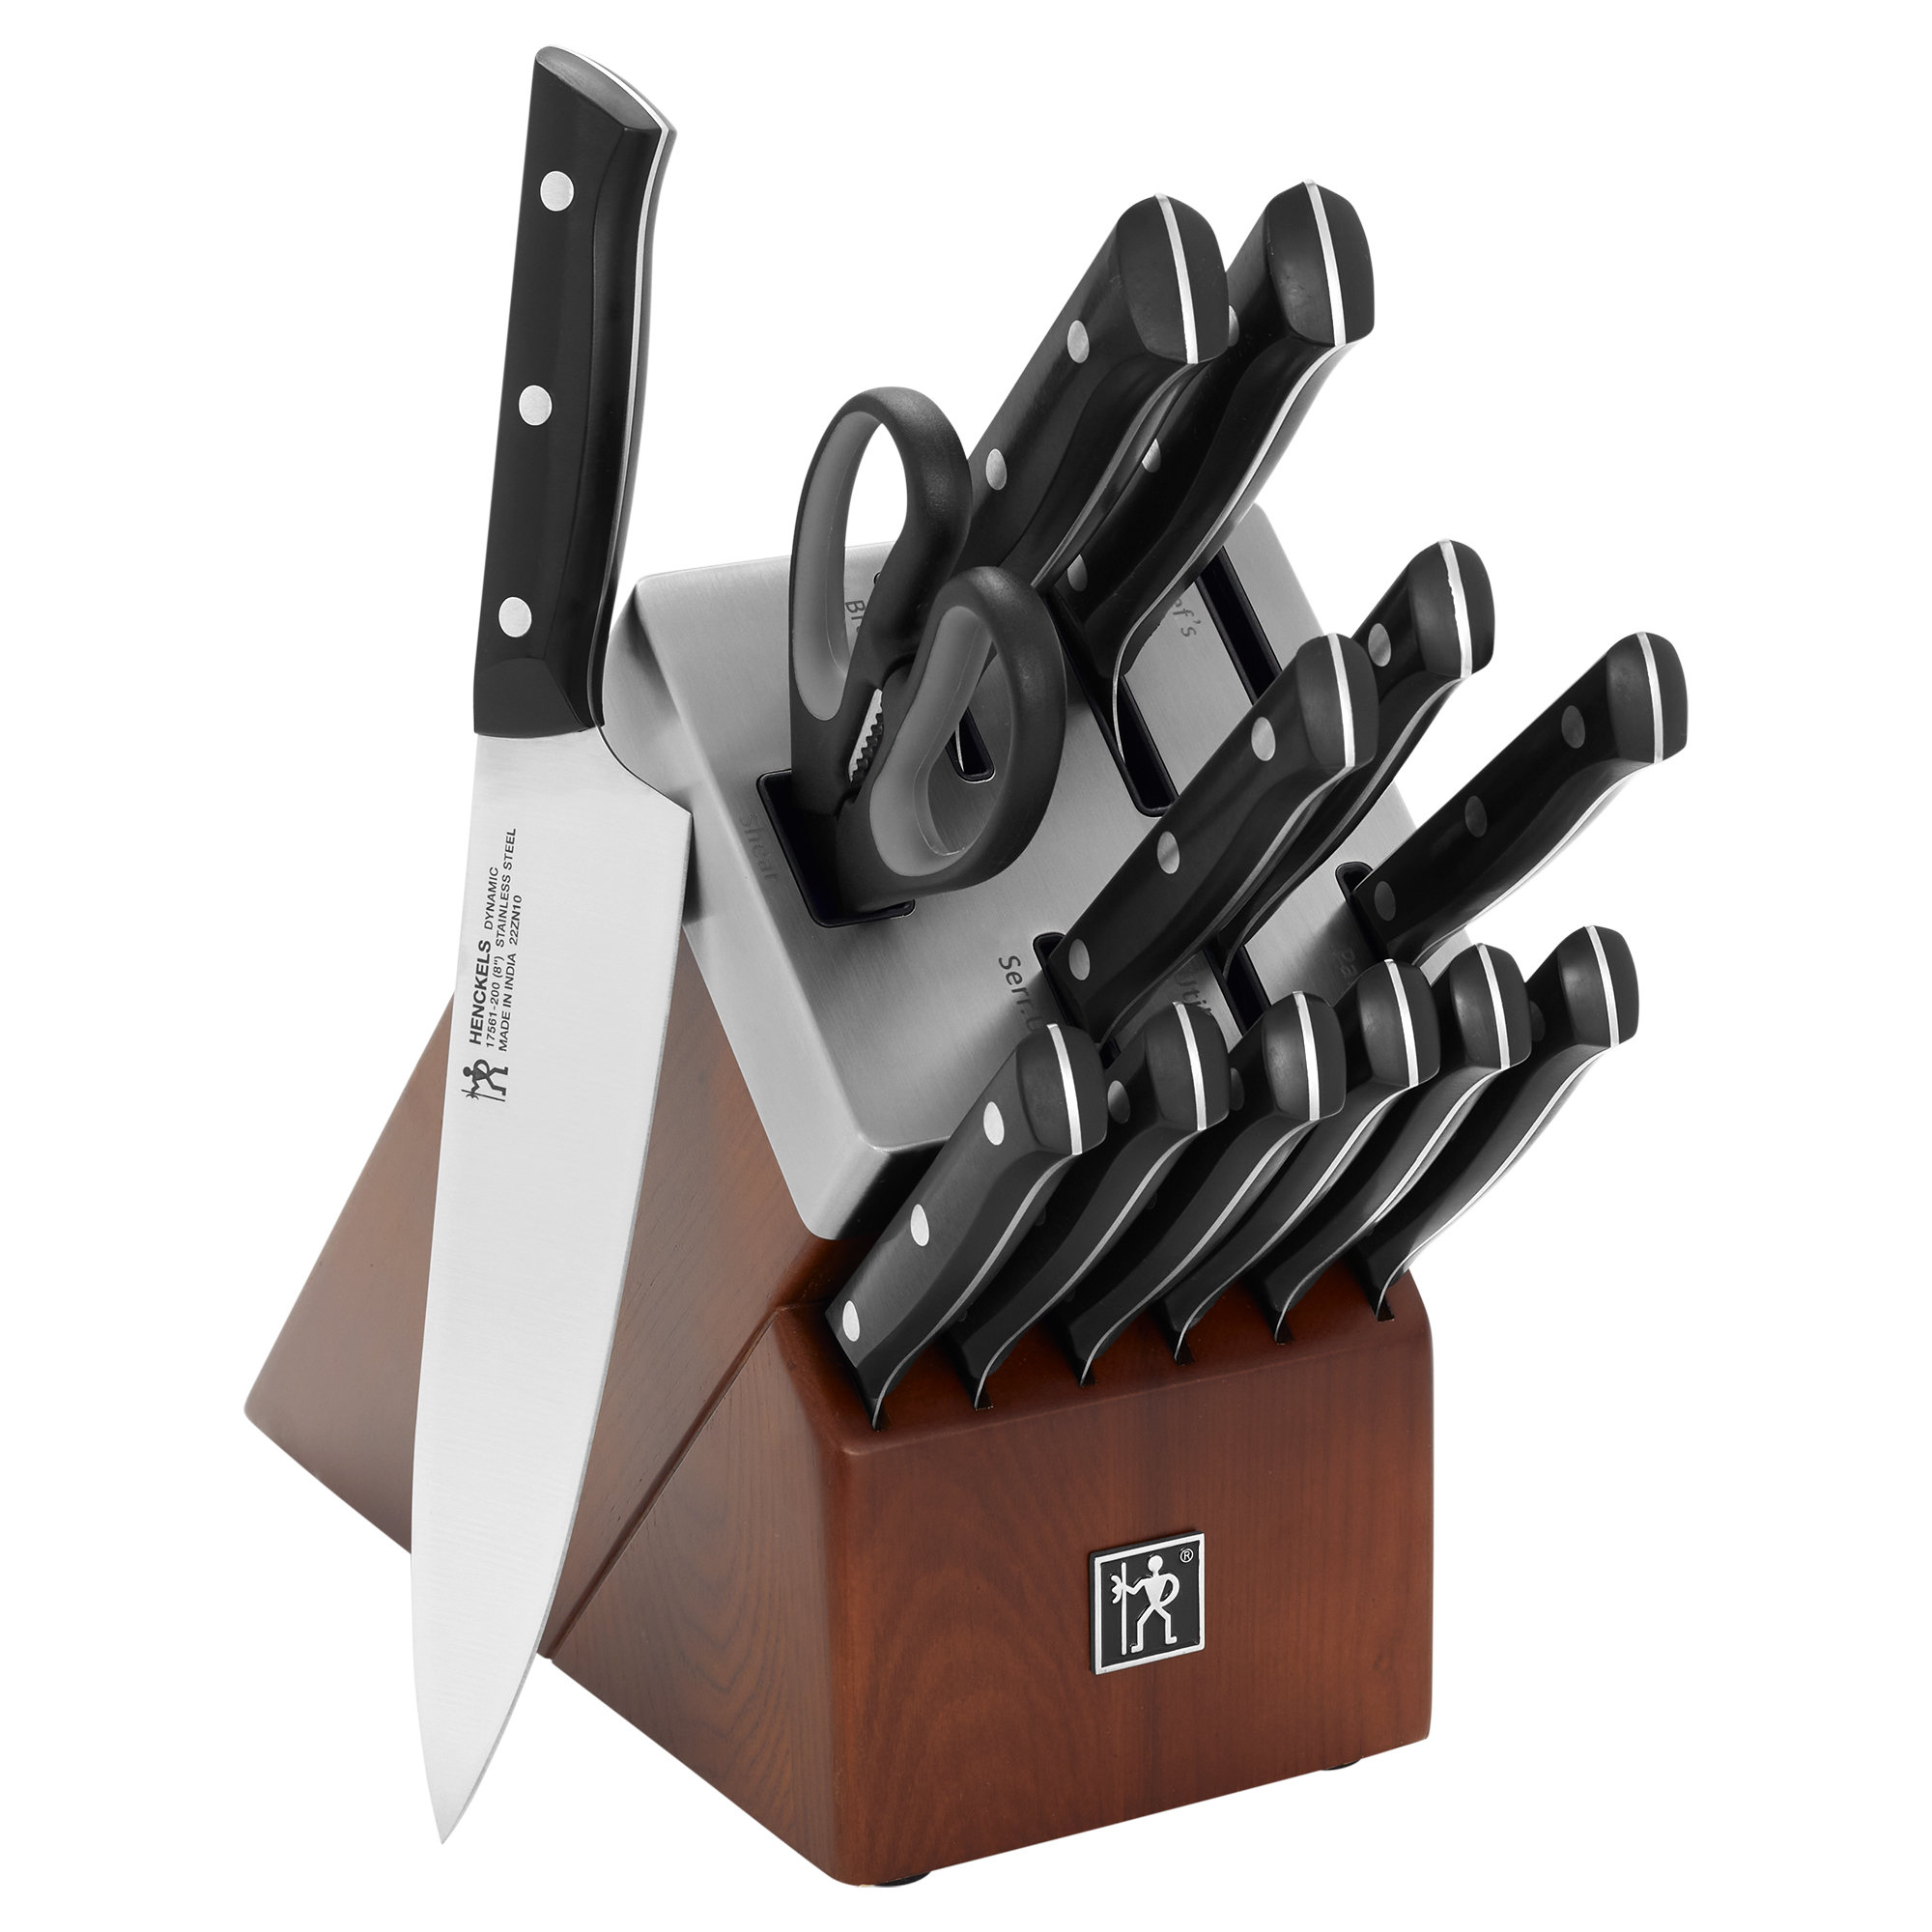 Henckels Modernist 14-pc Self-Sharpening Knife Set with Block